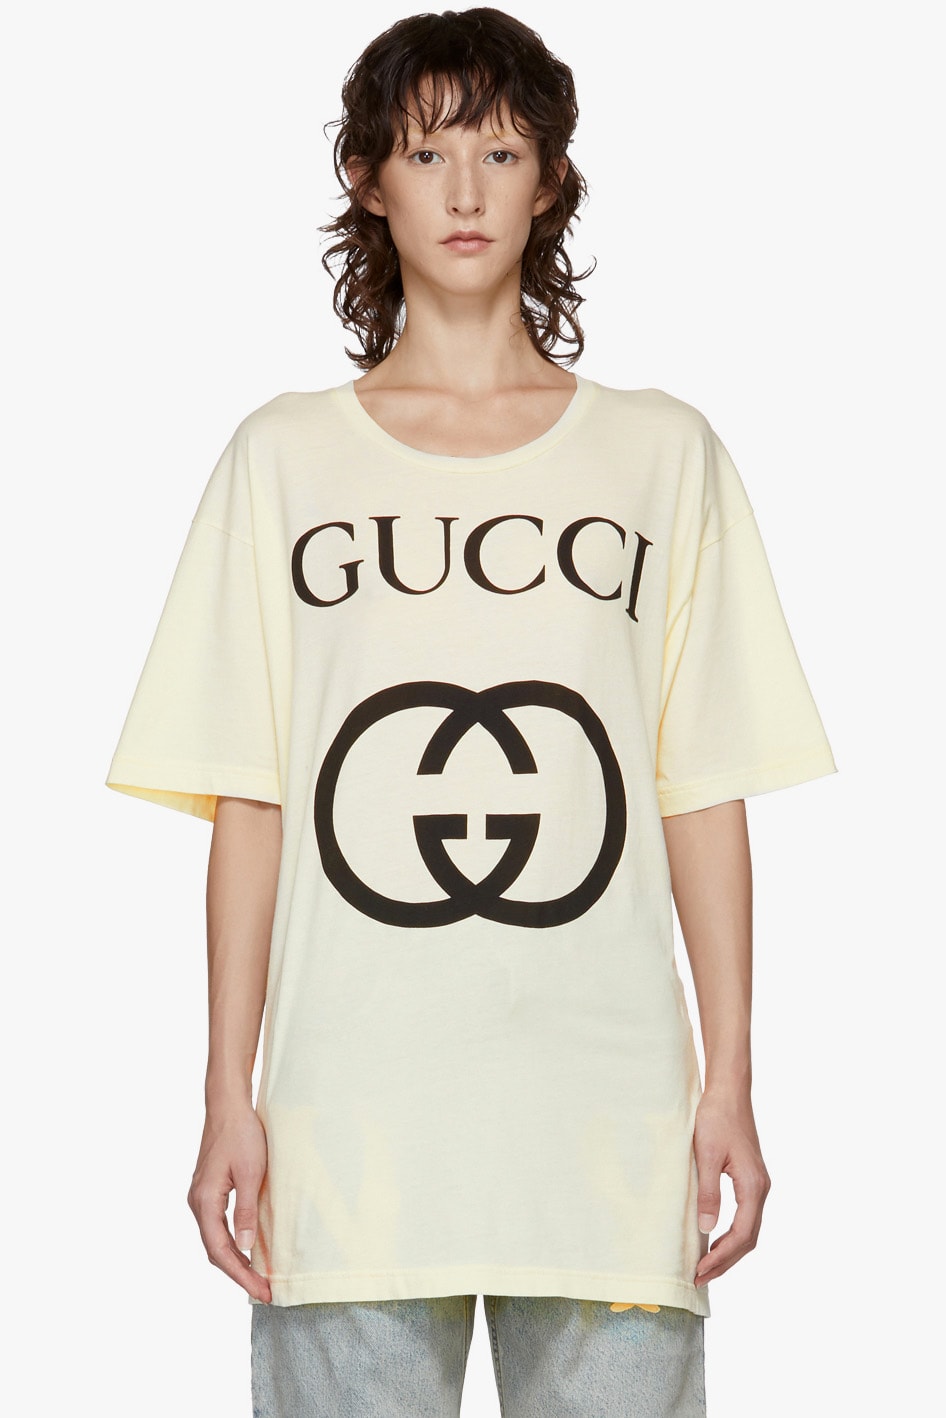 Gucci GG White Logo T-Shirt Print Fashion Alessandro Michele